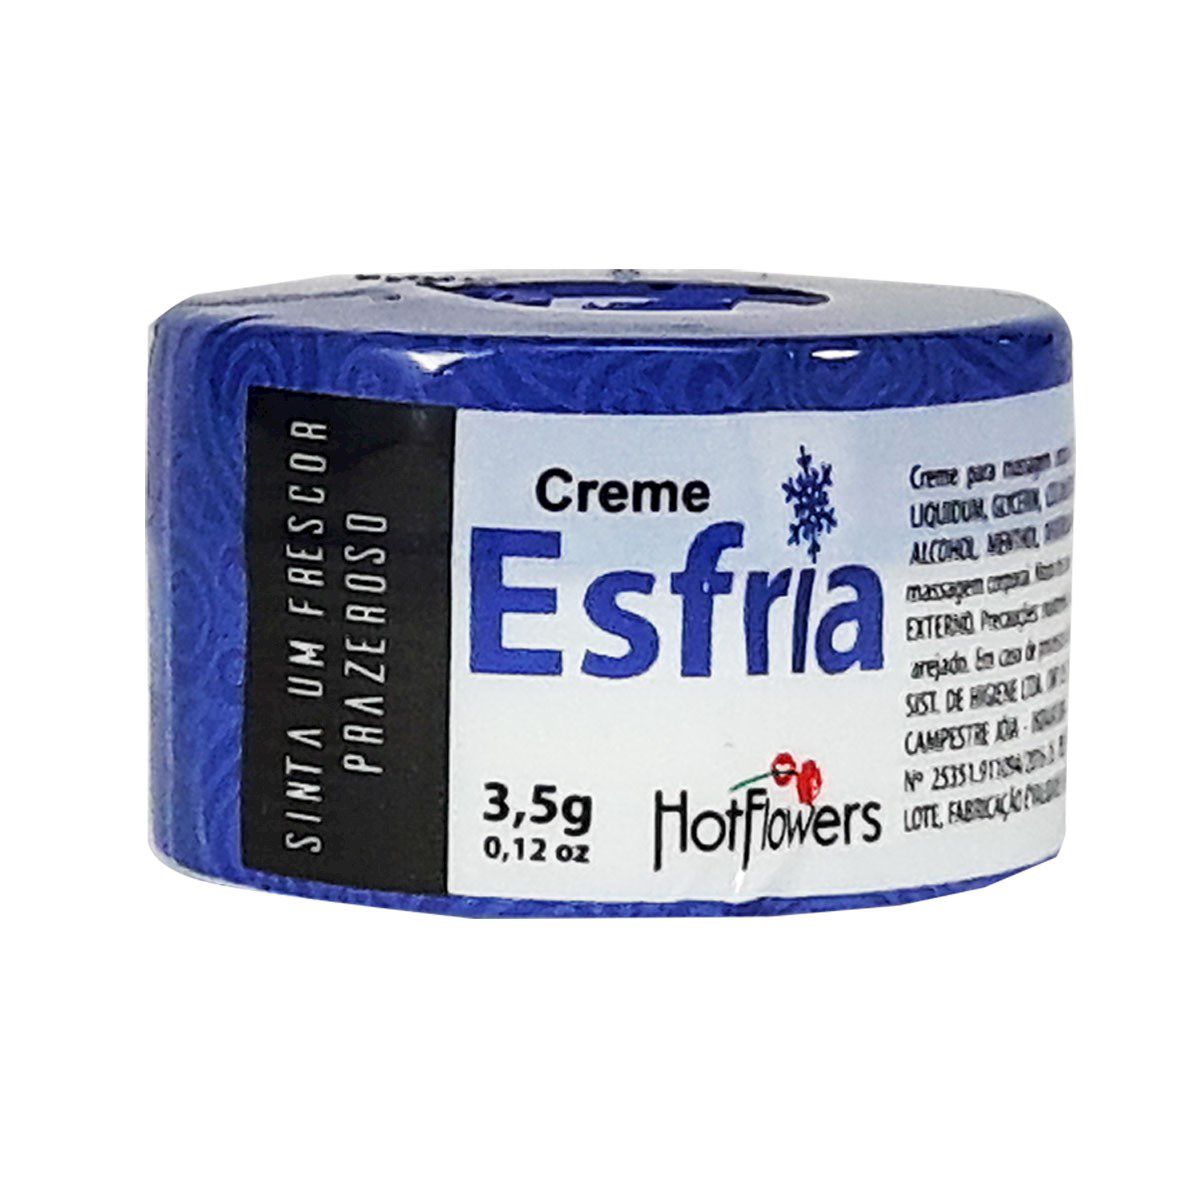 Creme Esfria 3,5 g - REF. HC575/0208